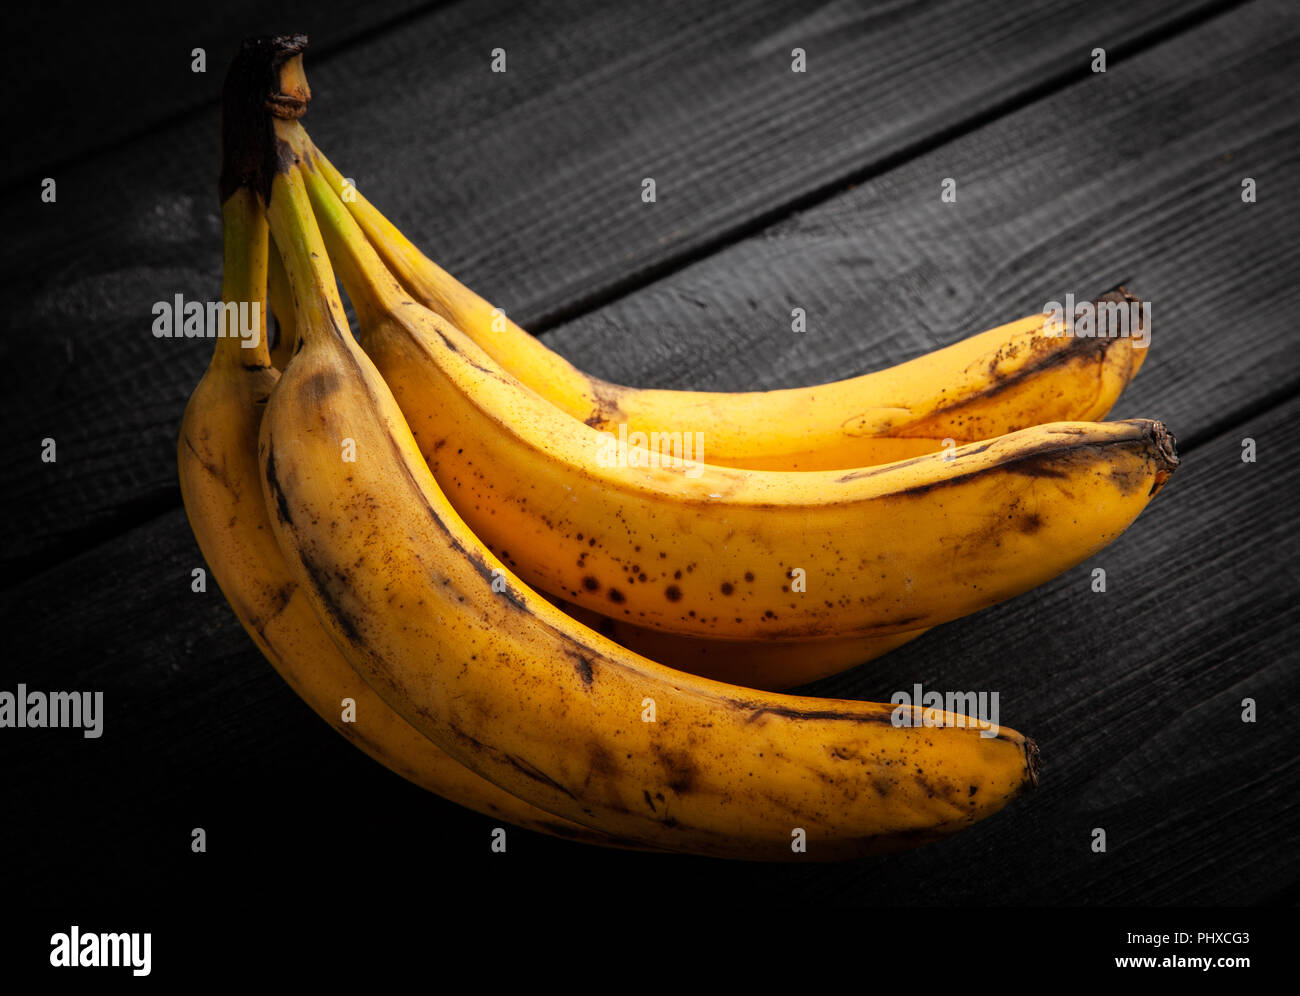 Overripe spotted bananas Stock Photo